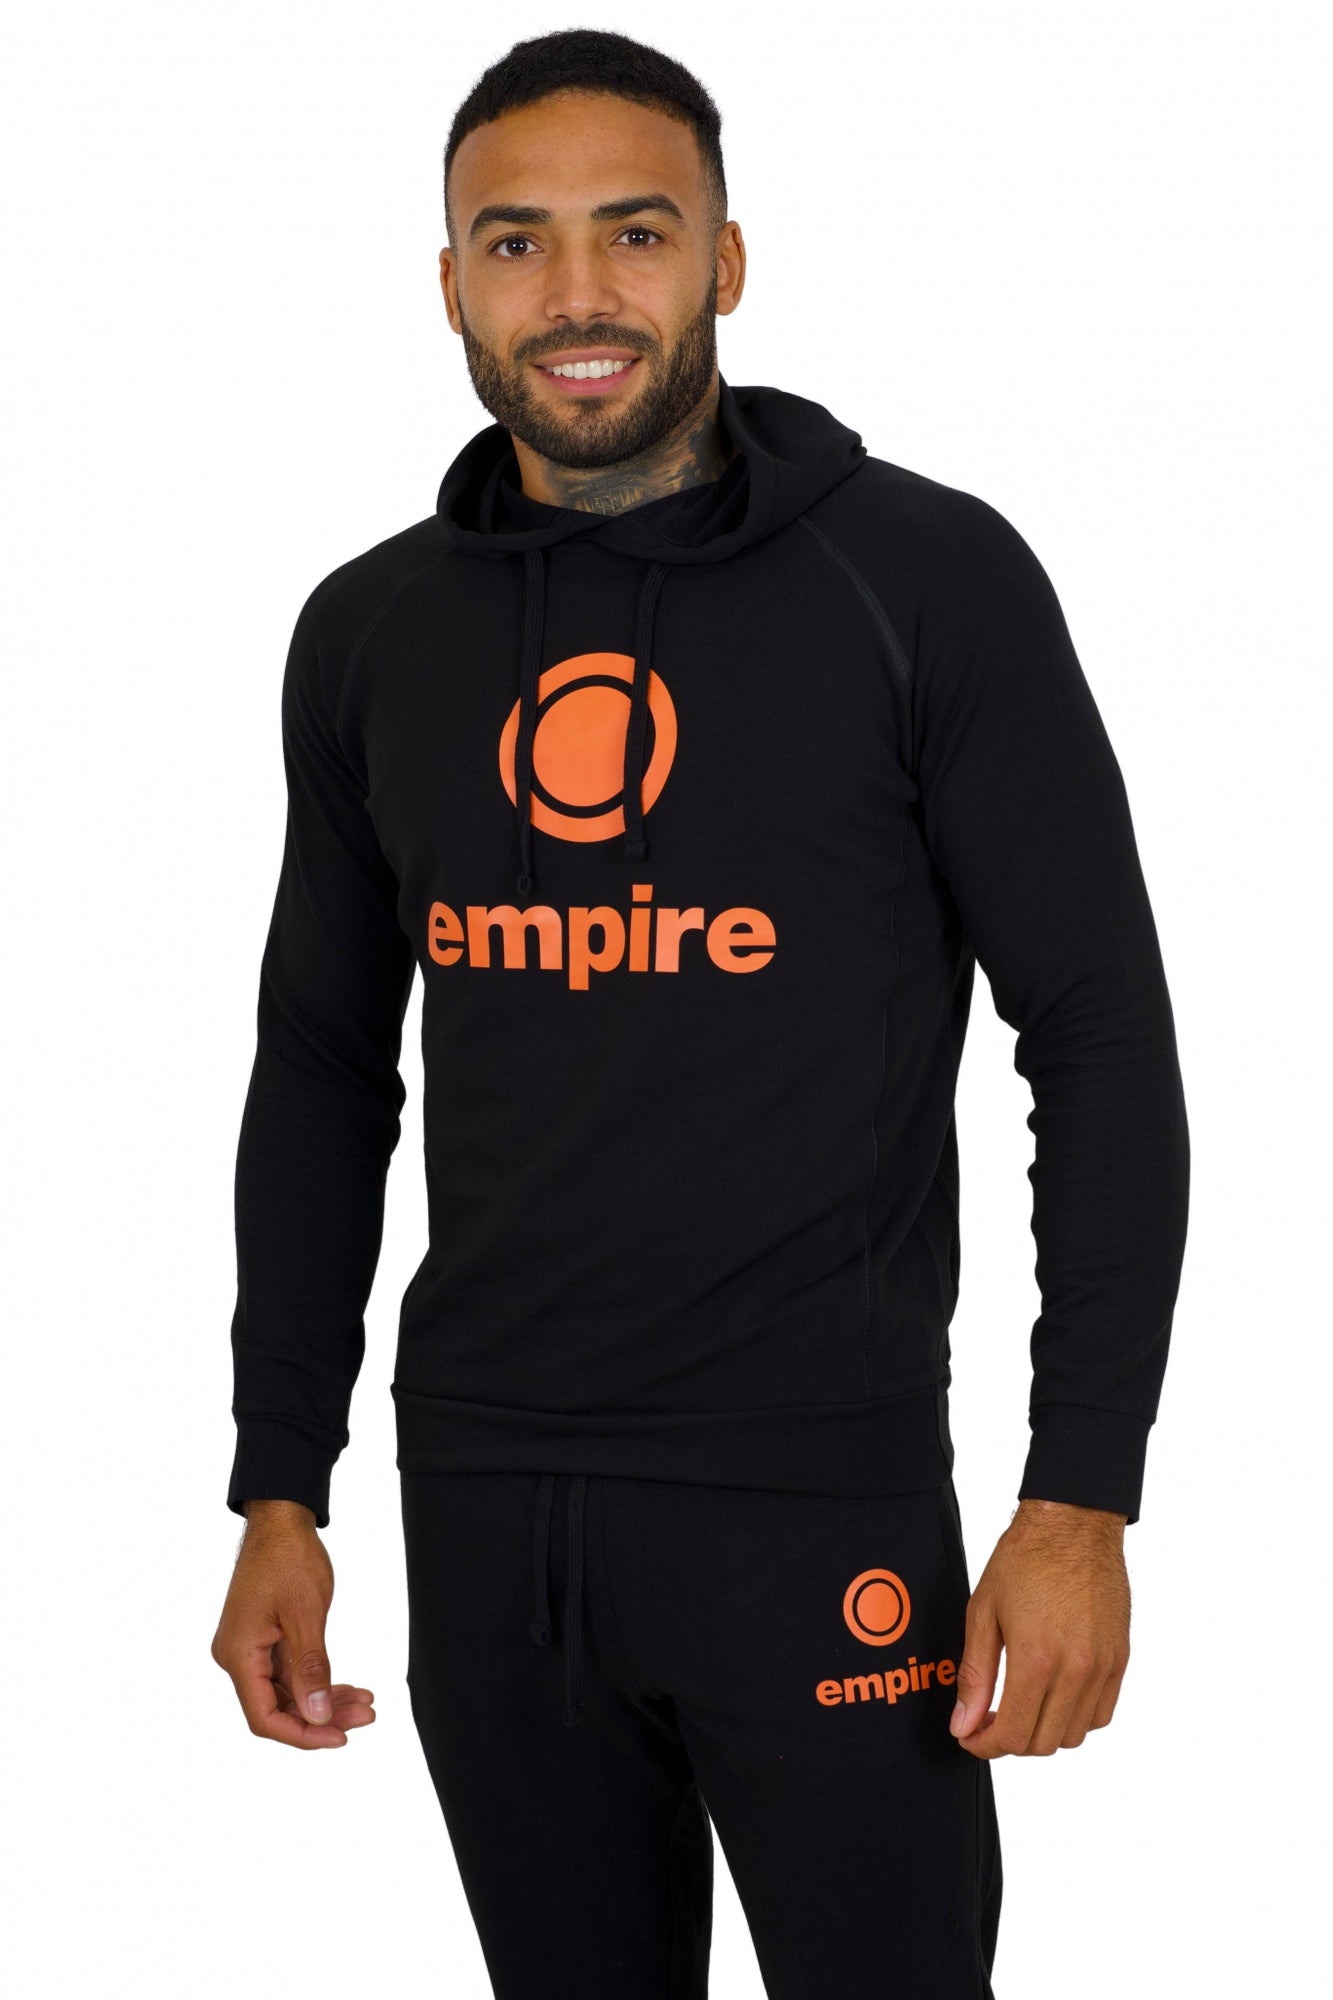 Empire Light Fitness Hoody - Image 1